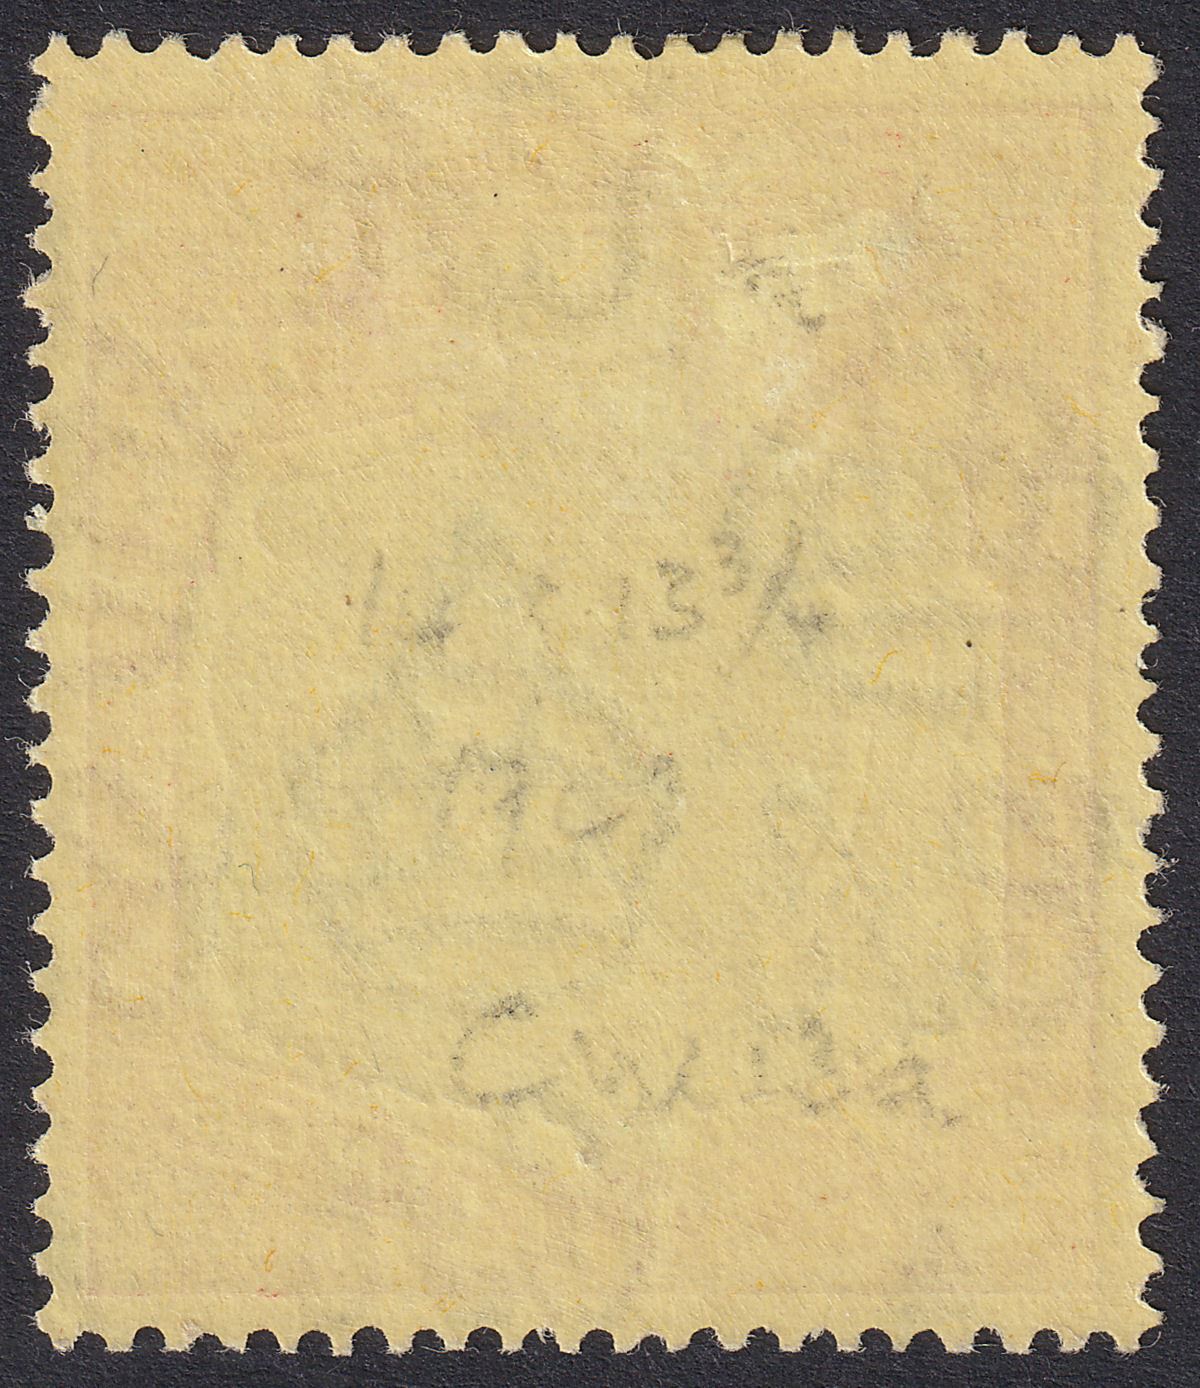 Bermuda 1943 KGVI 5sh Bluish-Green + Carmine-Red on Pale Yellow p14 Mint SG118d